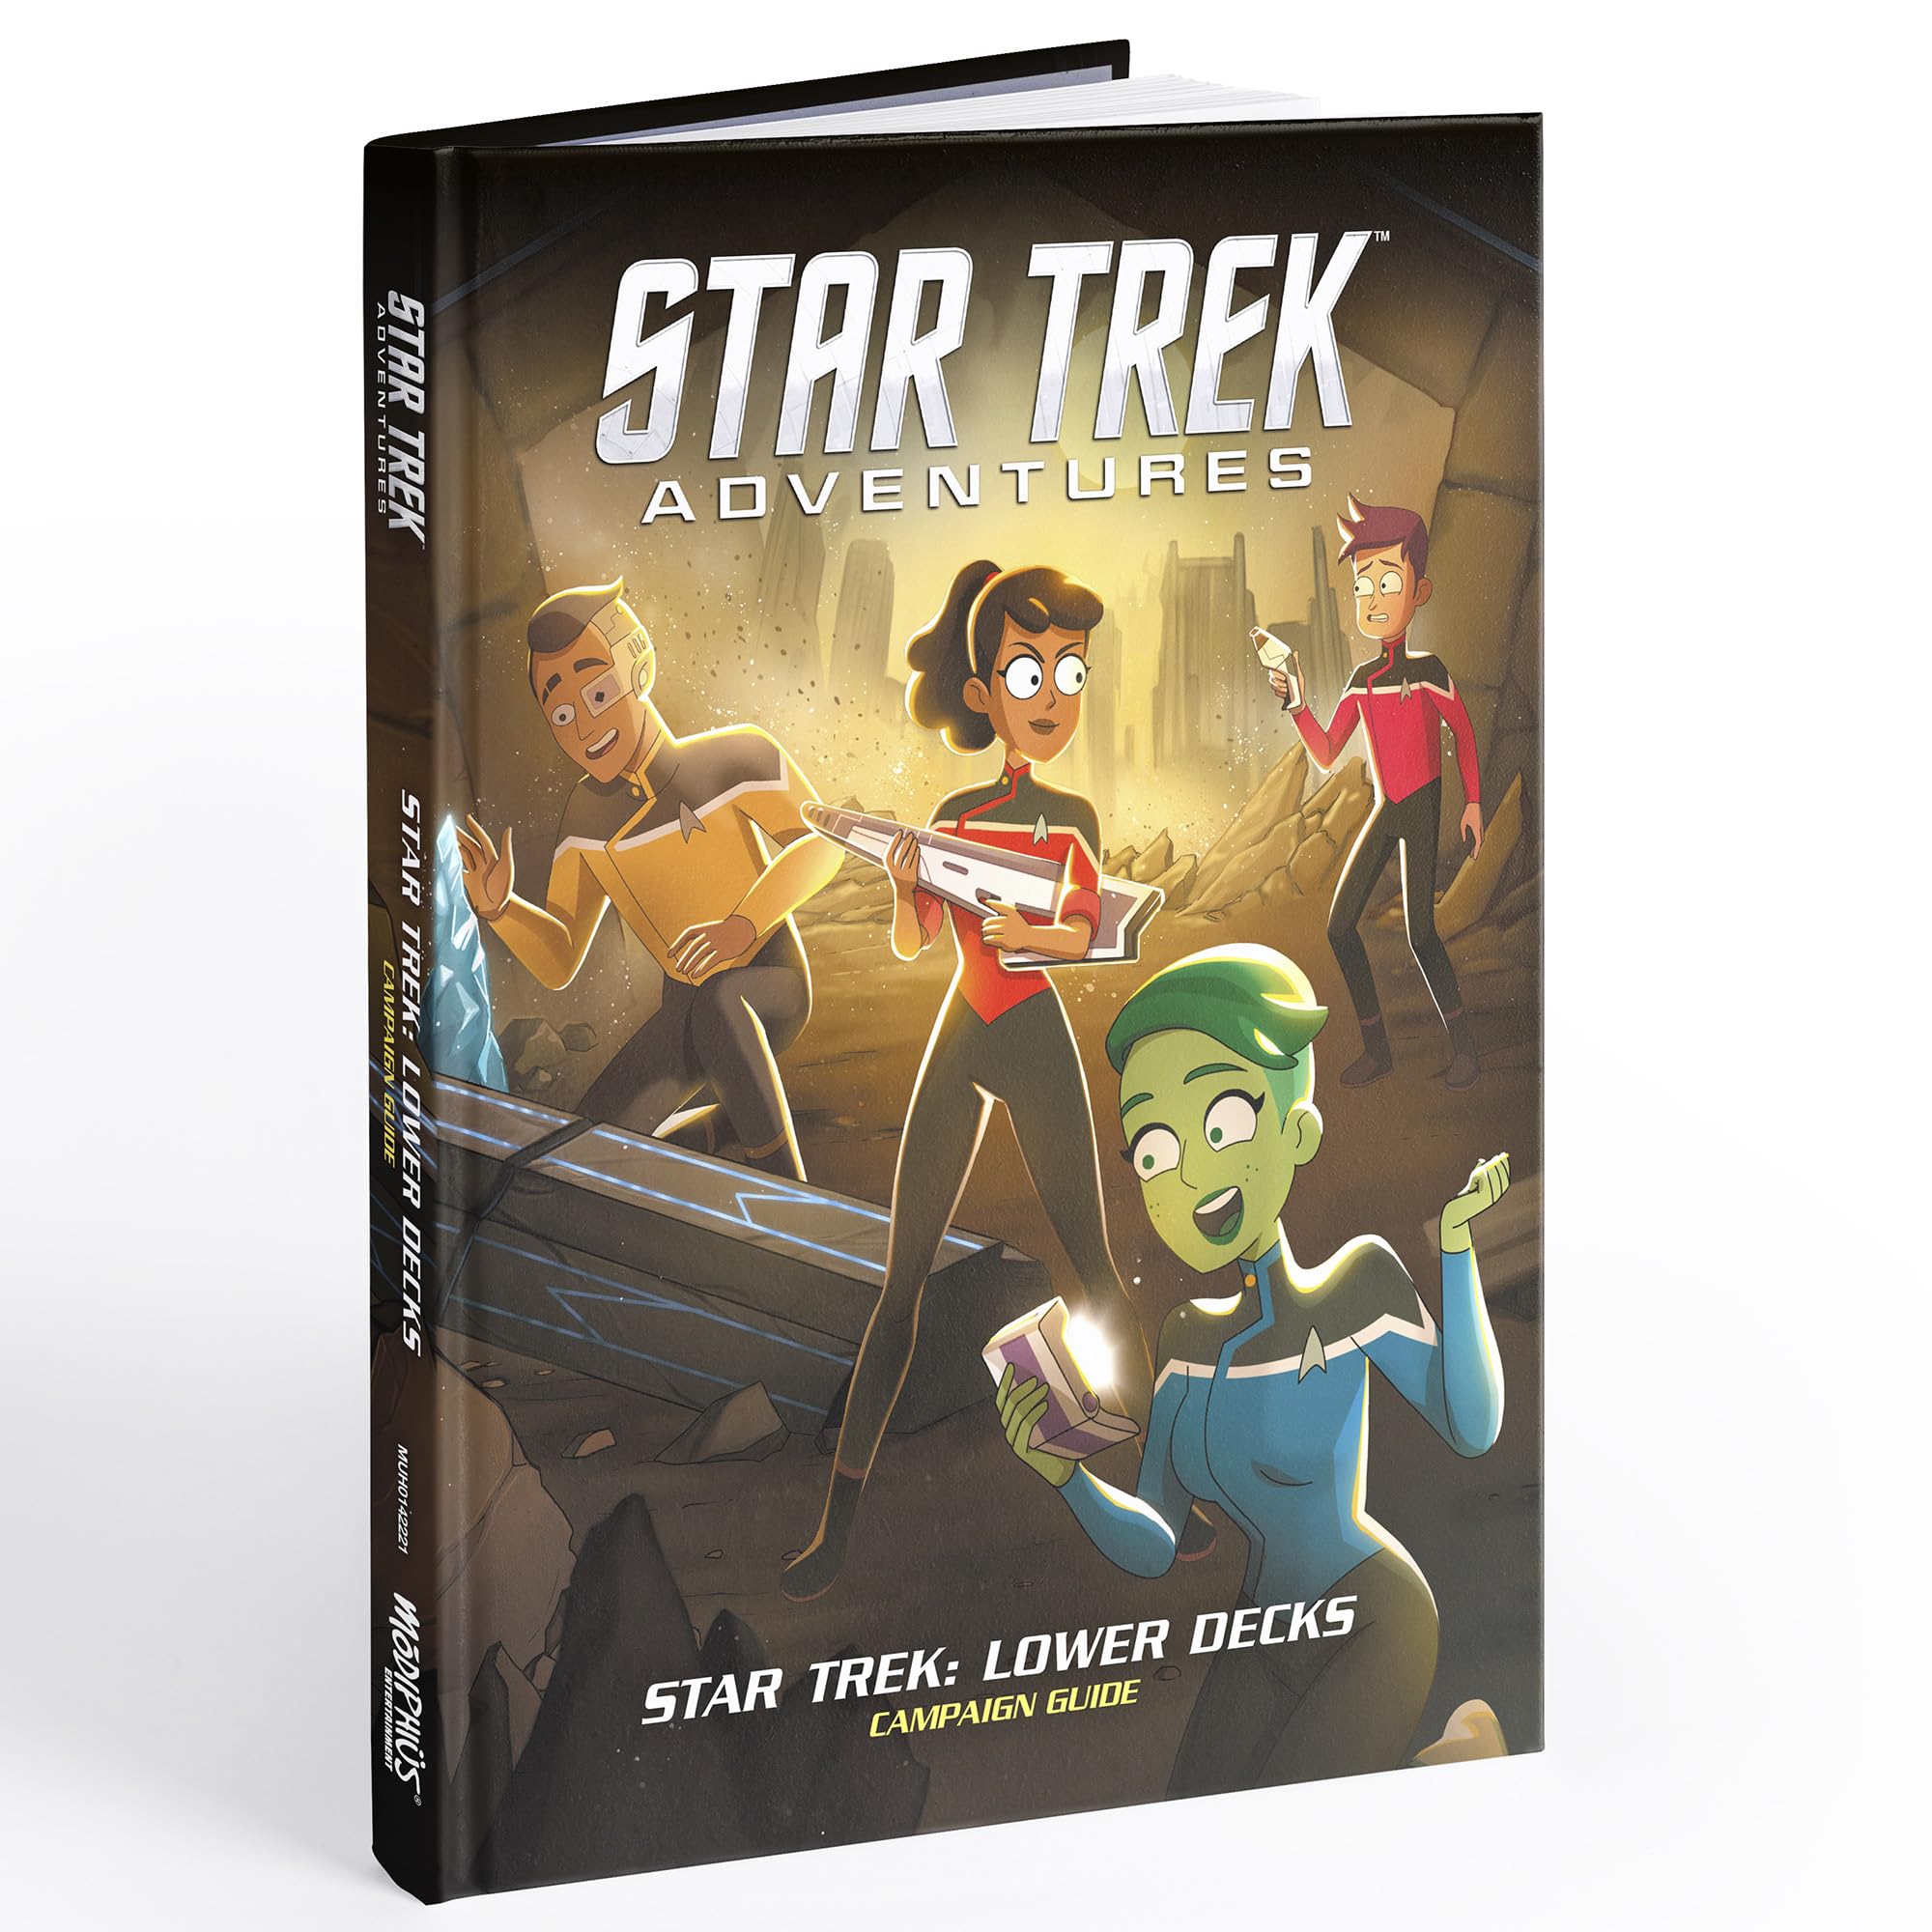 Modiphius: Star Trek Adventures Star Trek: Lower Decks Campaign Guide - Expansion Hardcover RPG Book, New Content